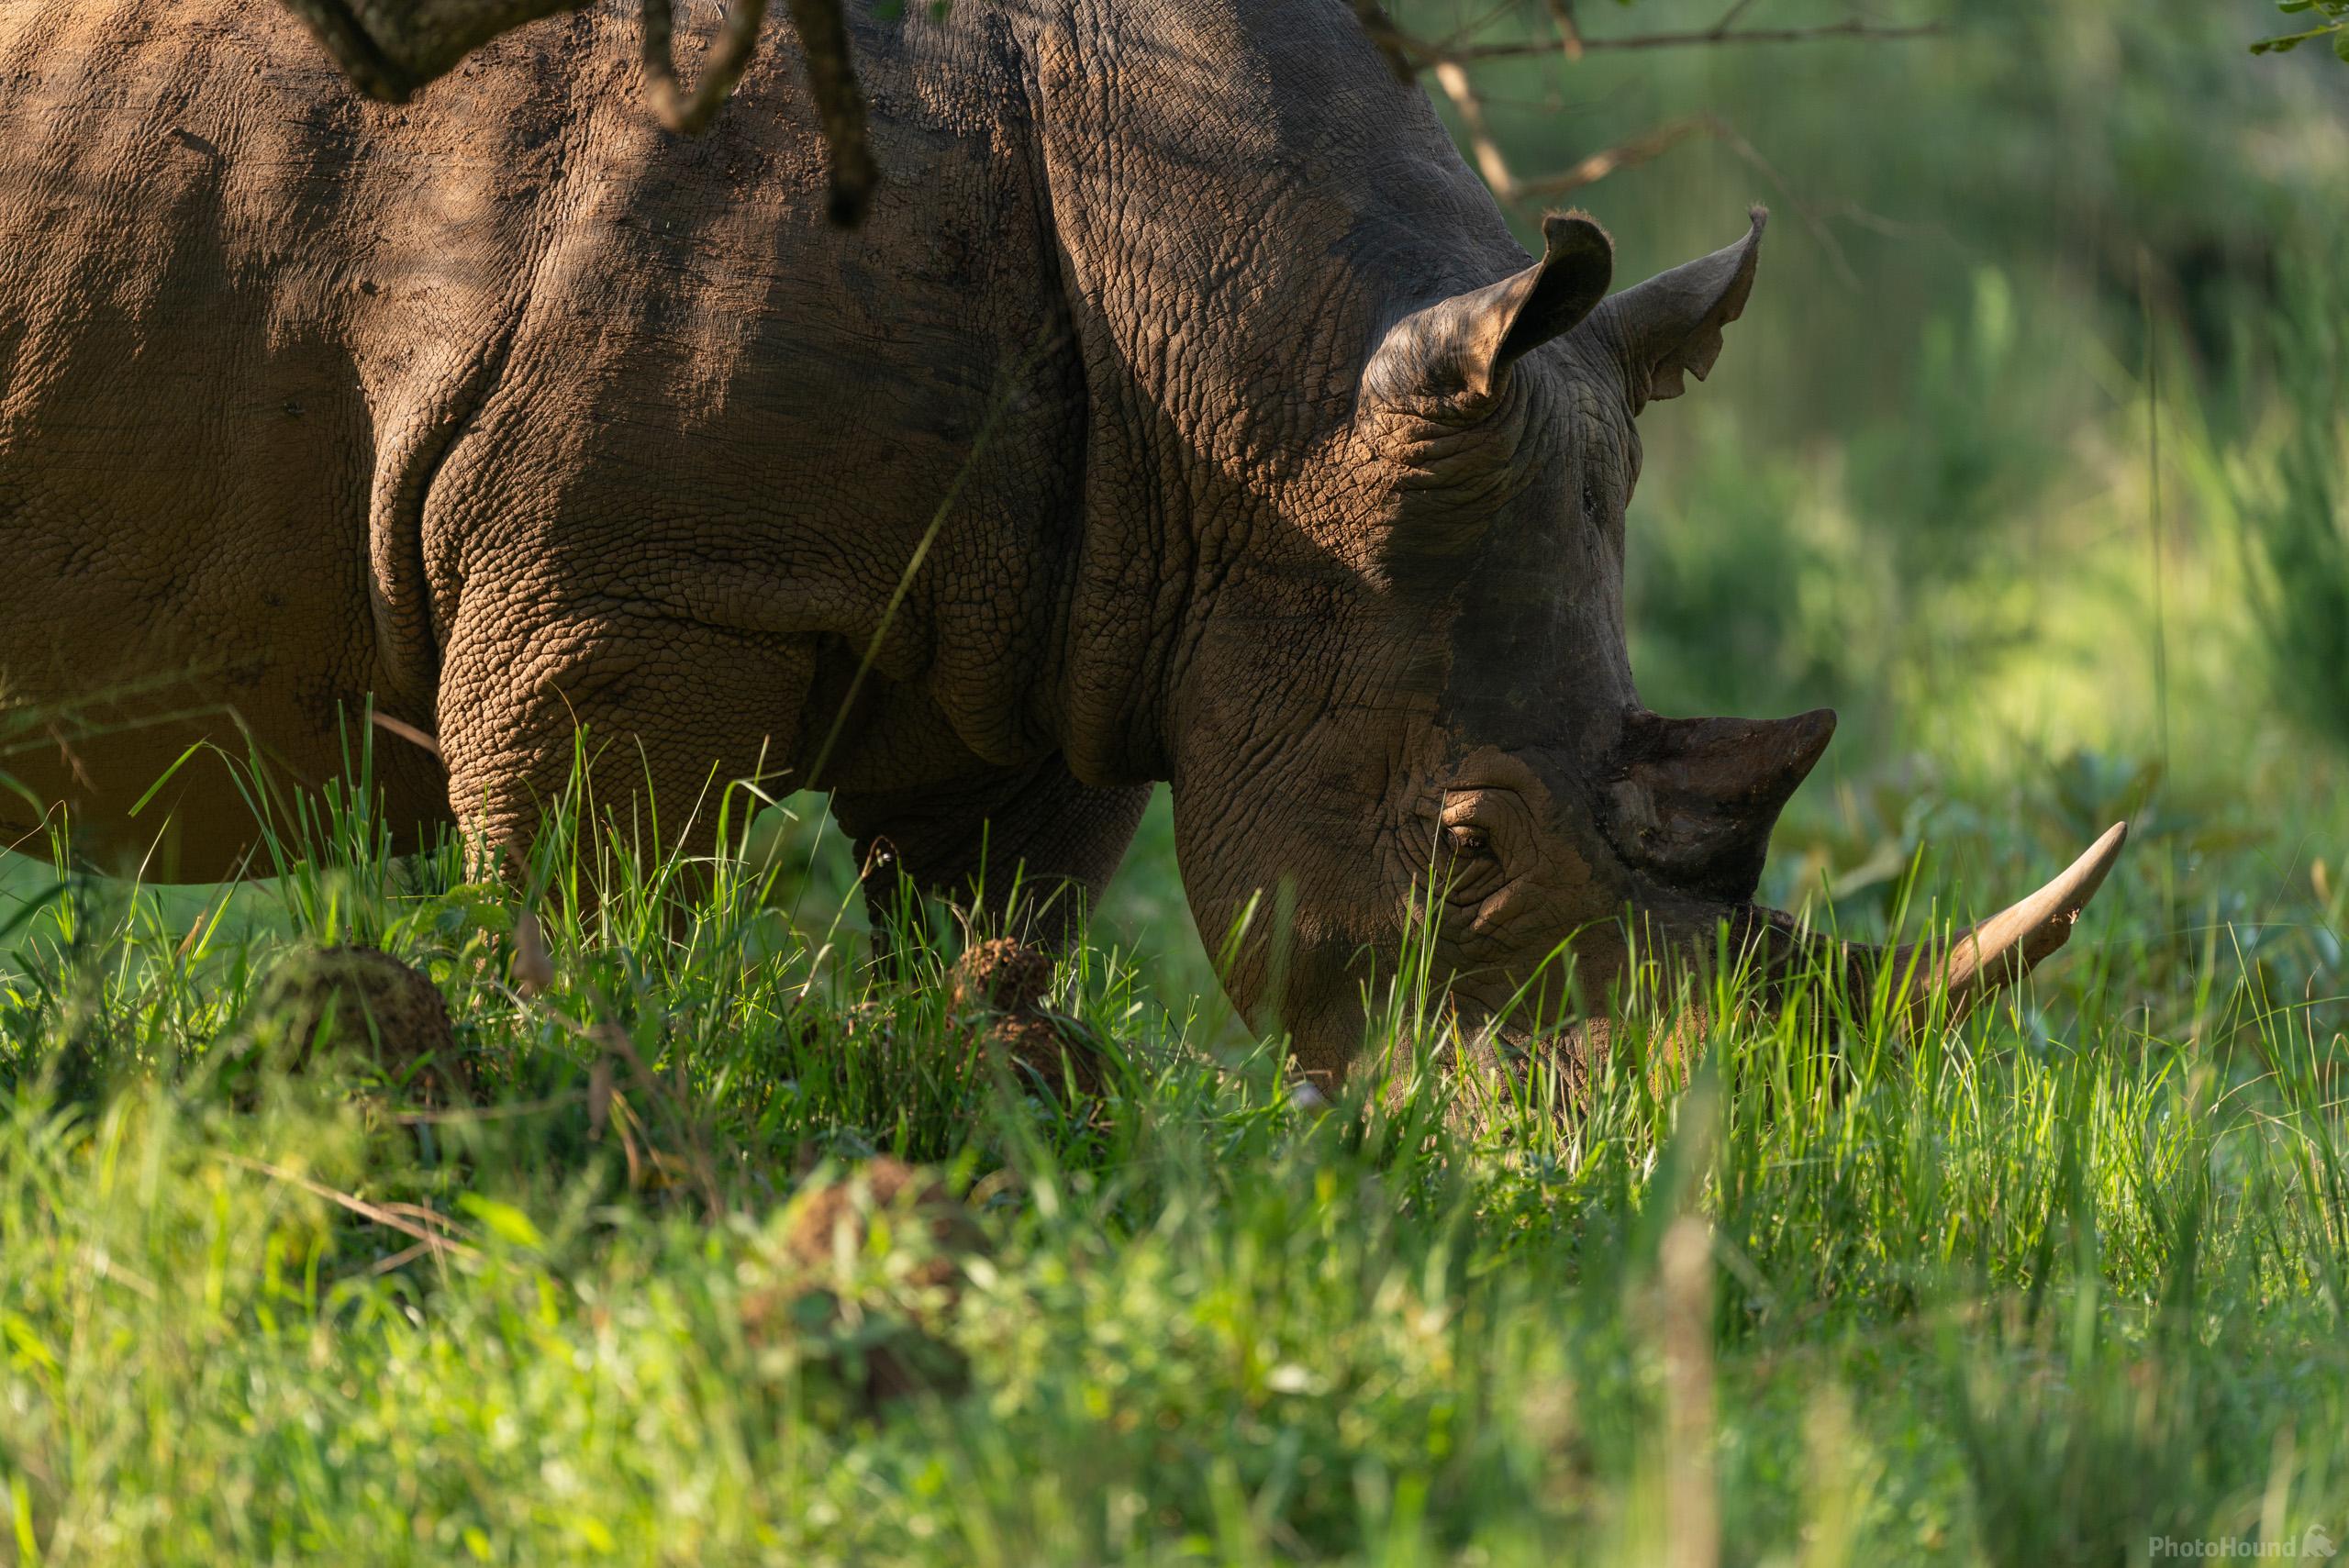 Image of Ziwa Rhino Sanctuary by Luka Esenko